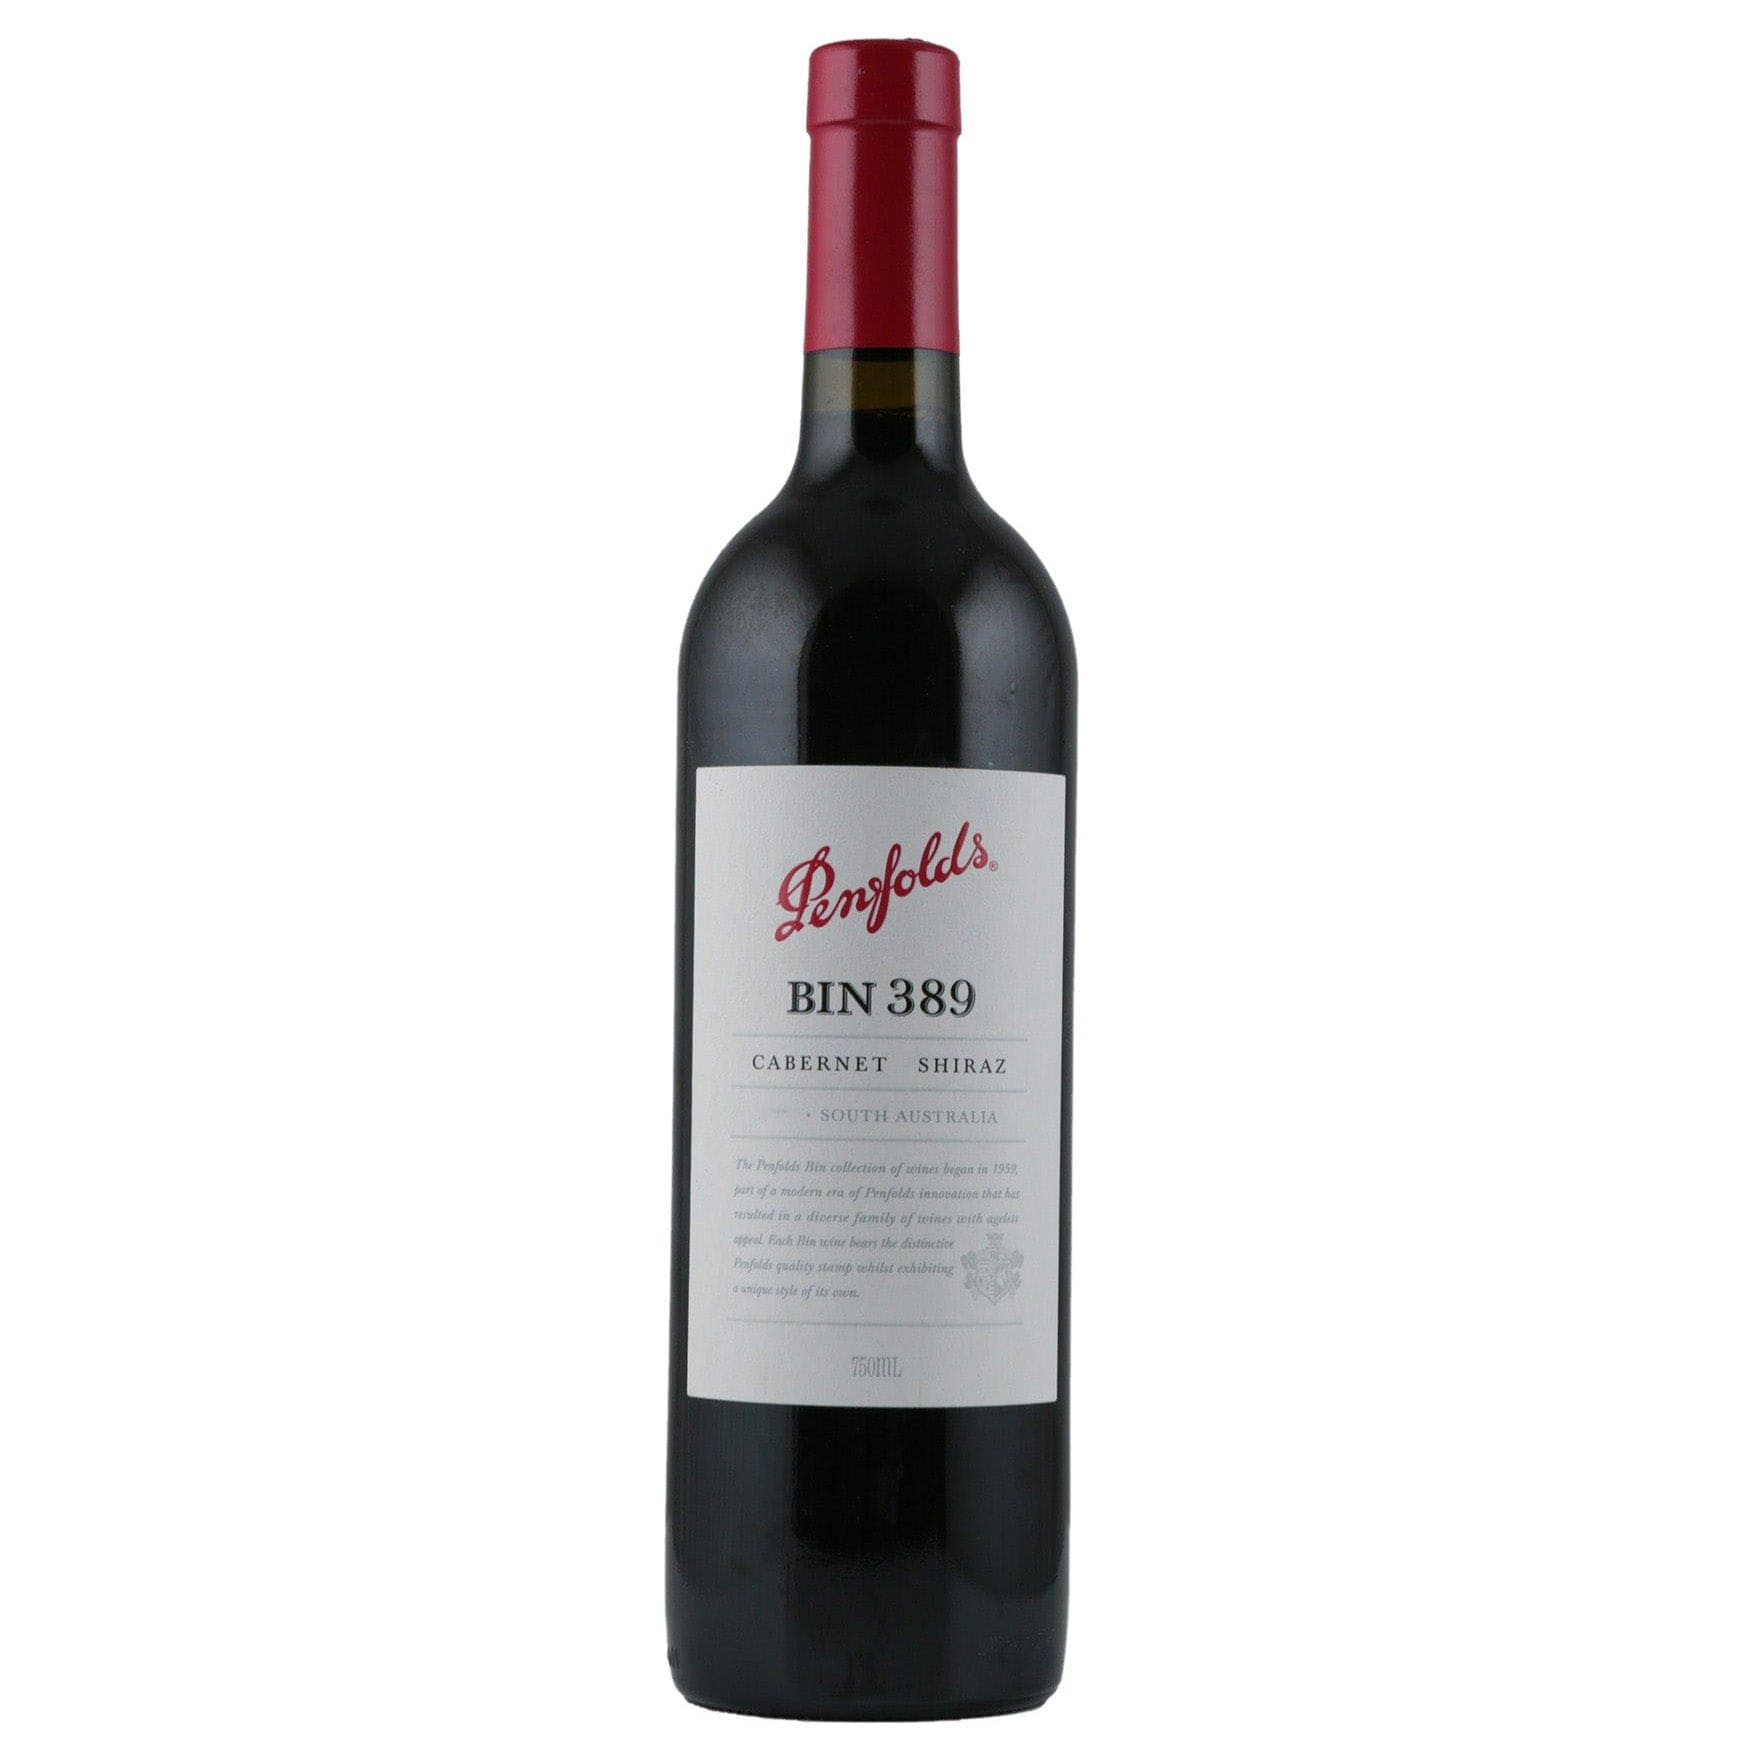 Single bottle of Red wine Penfolds, Bin 389 Cabernet Shiraz, South Australia, 2002 54% Cabernet Sauvignon & 46% Shiraz